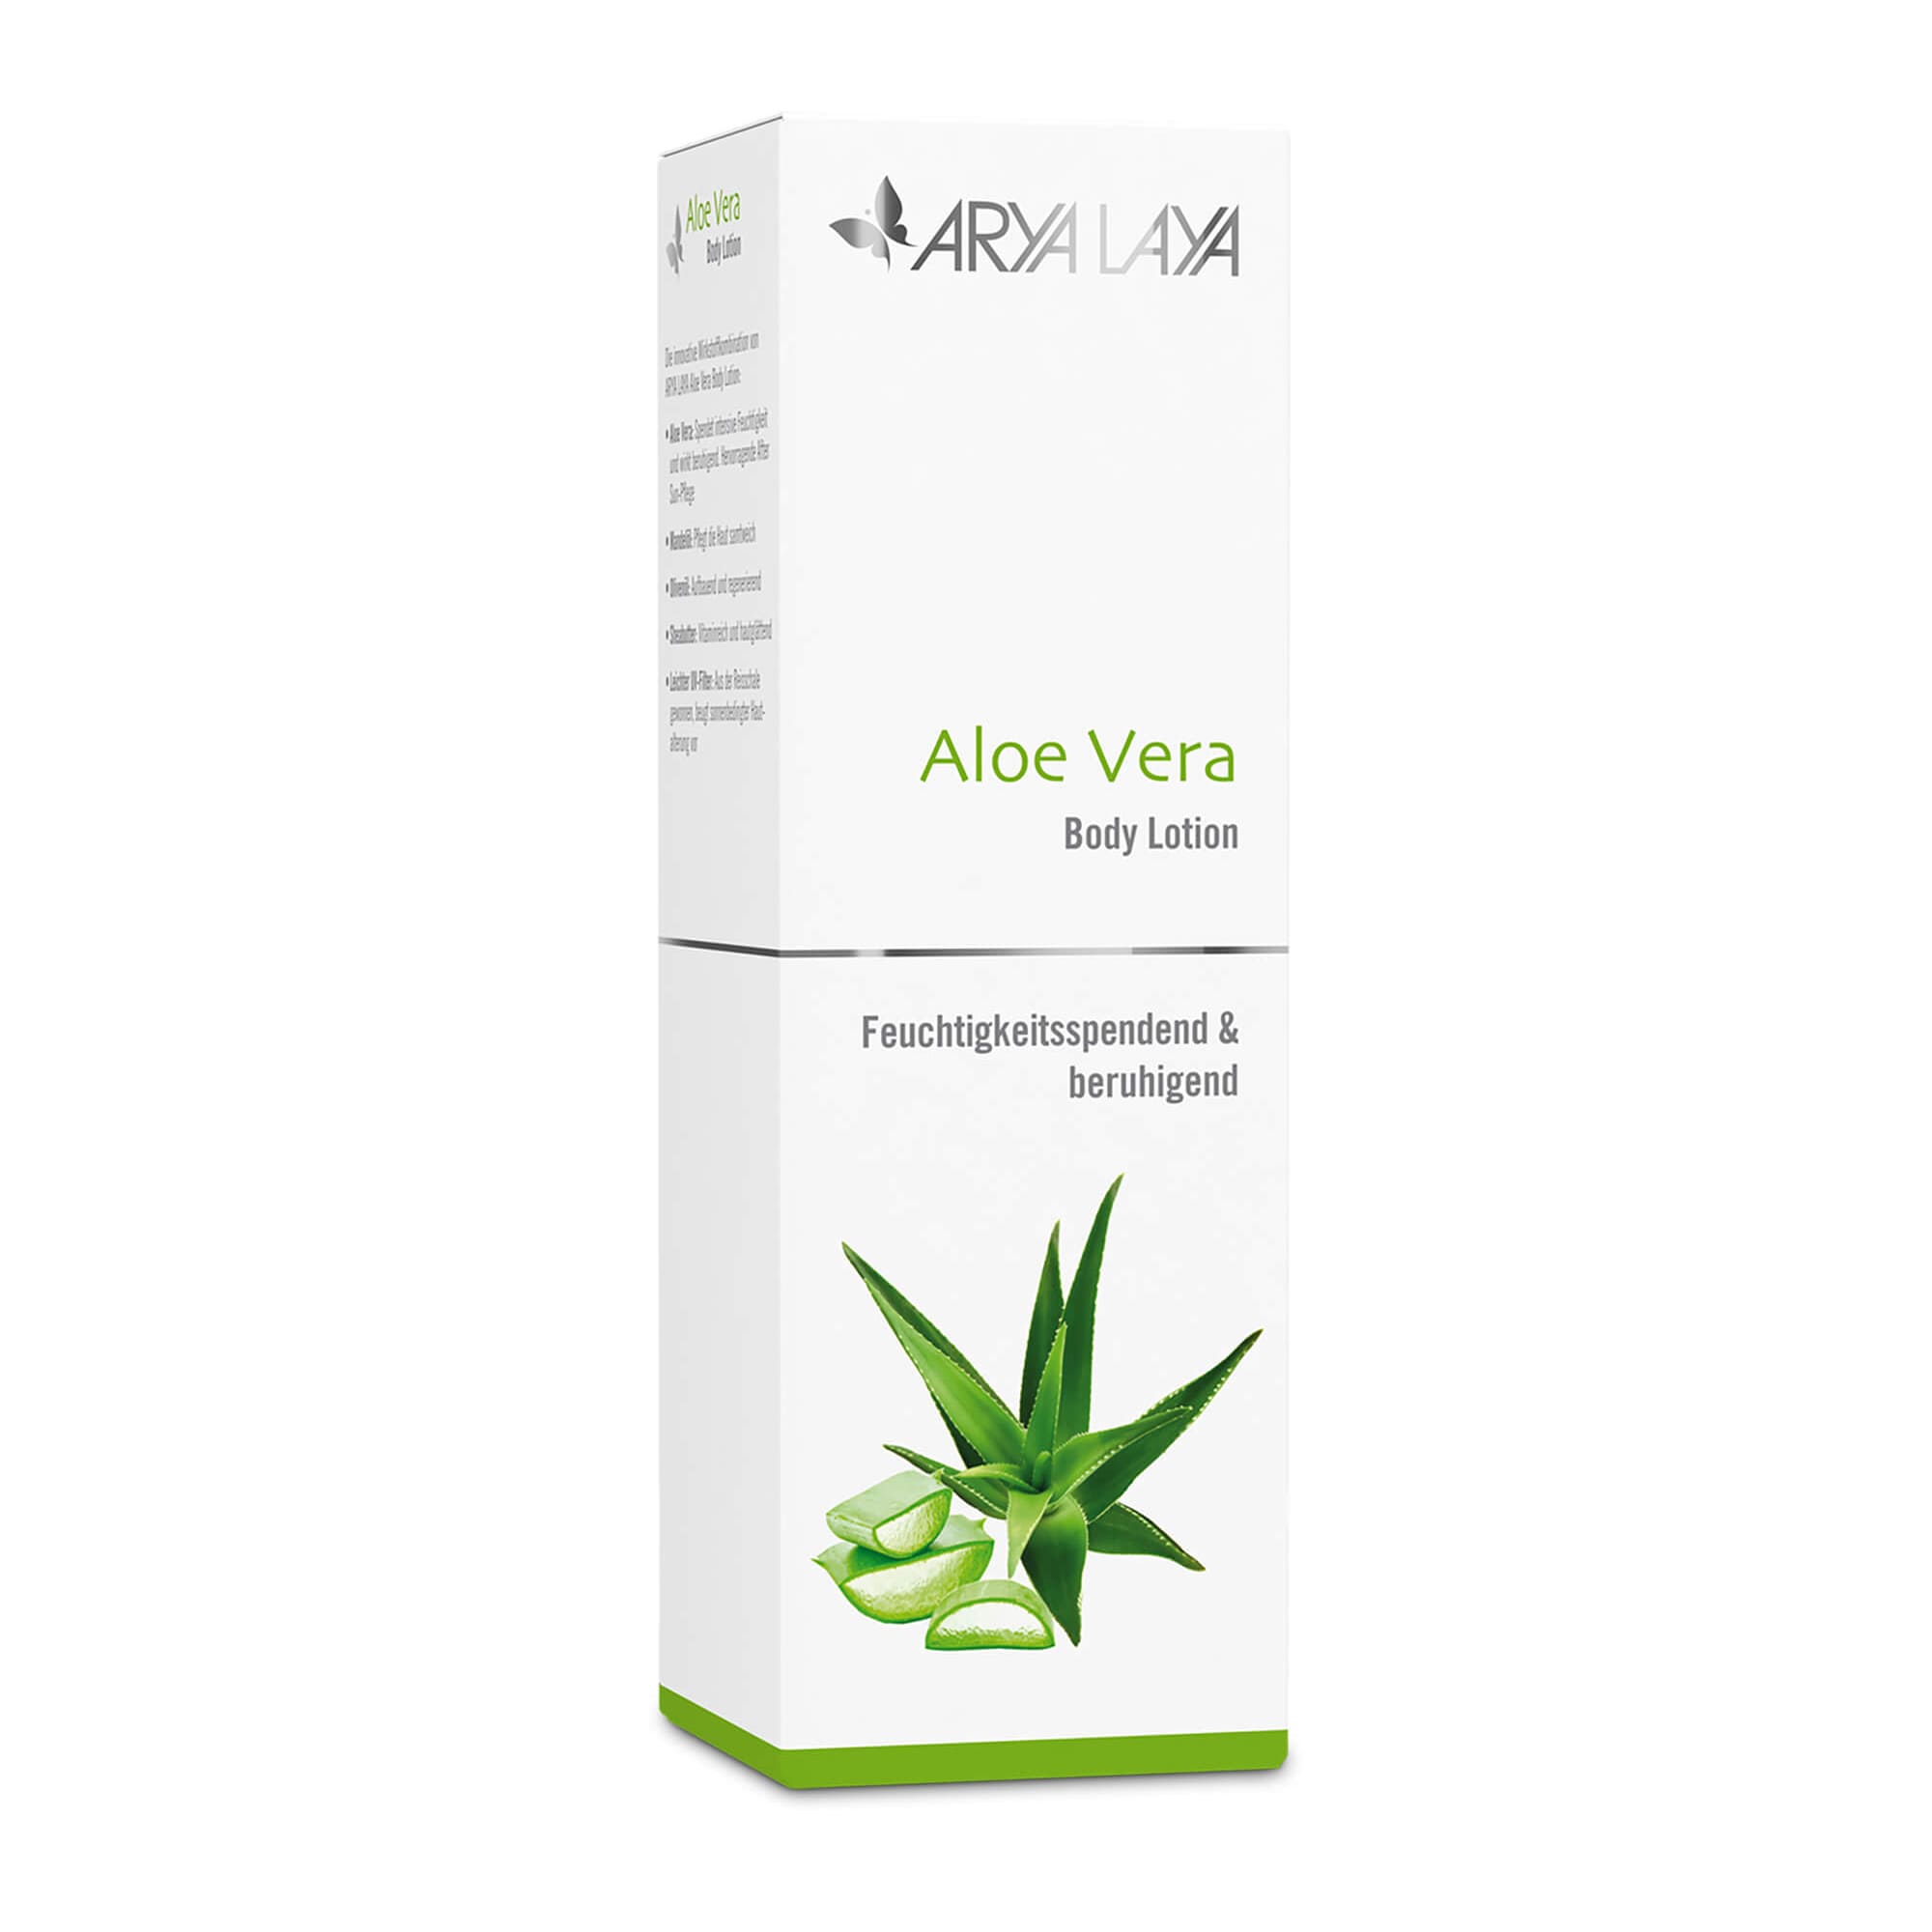 Faltschachtel mit ARYA LAYA Body Lotion Aloe Vera, 150 ml